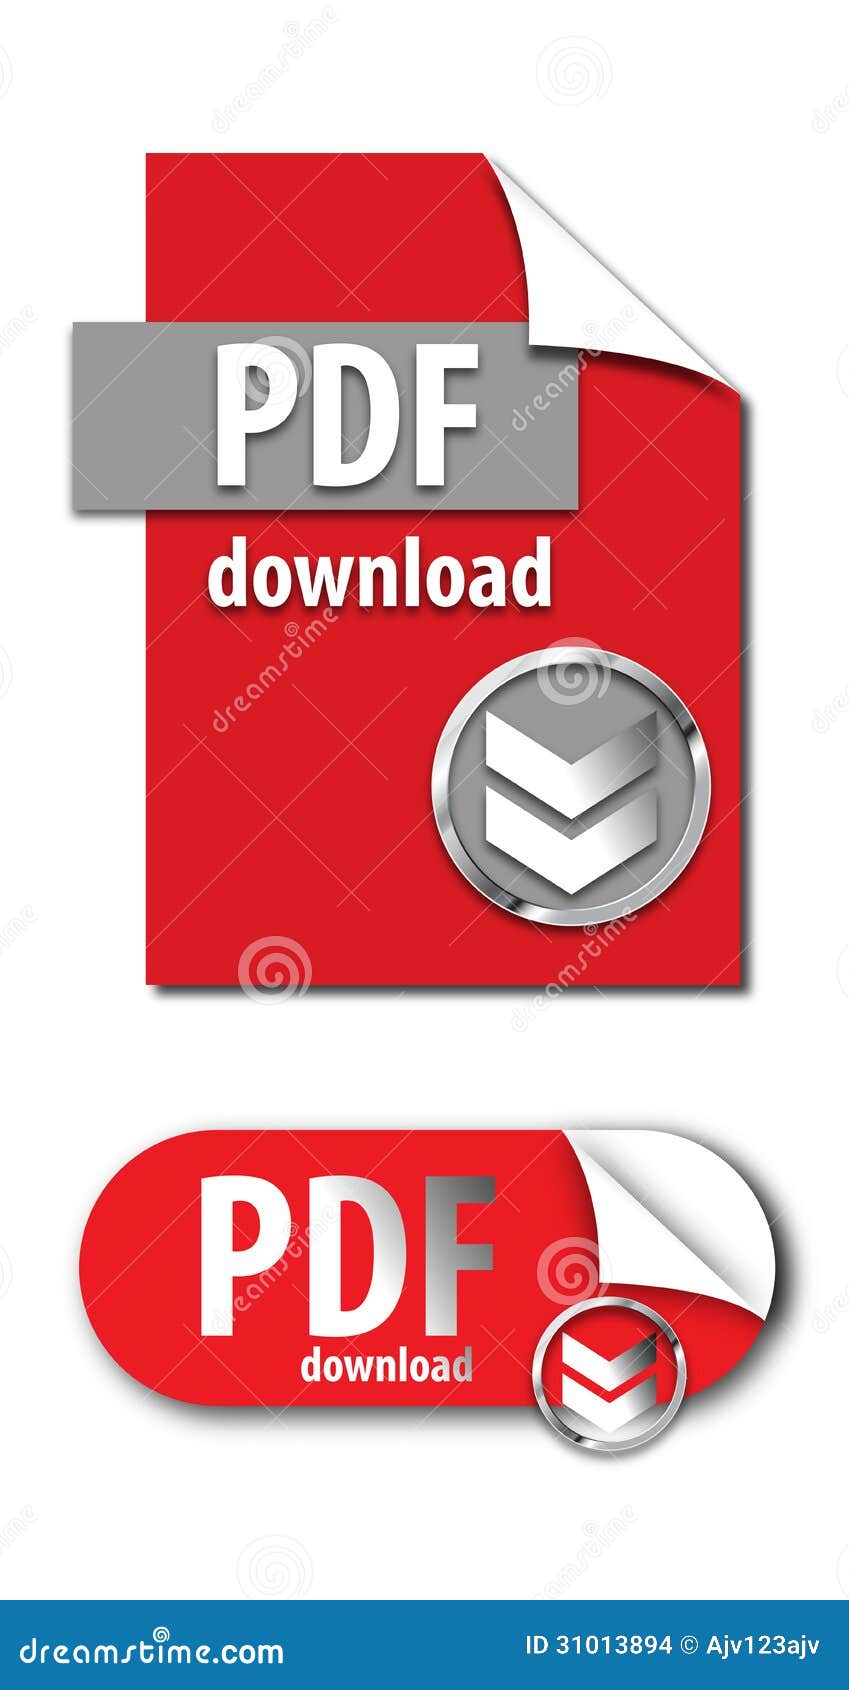 pdf download graphic